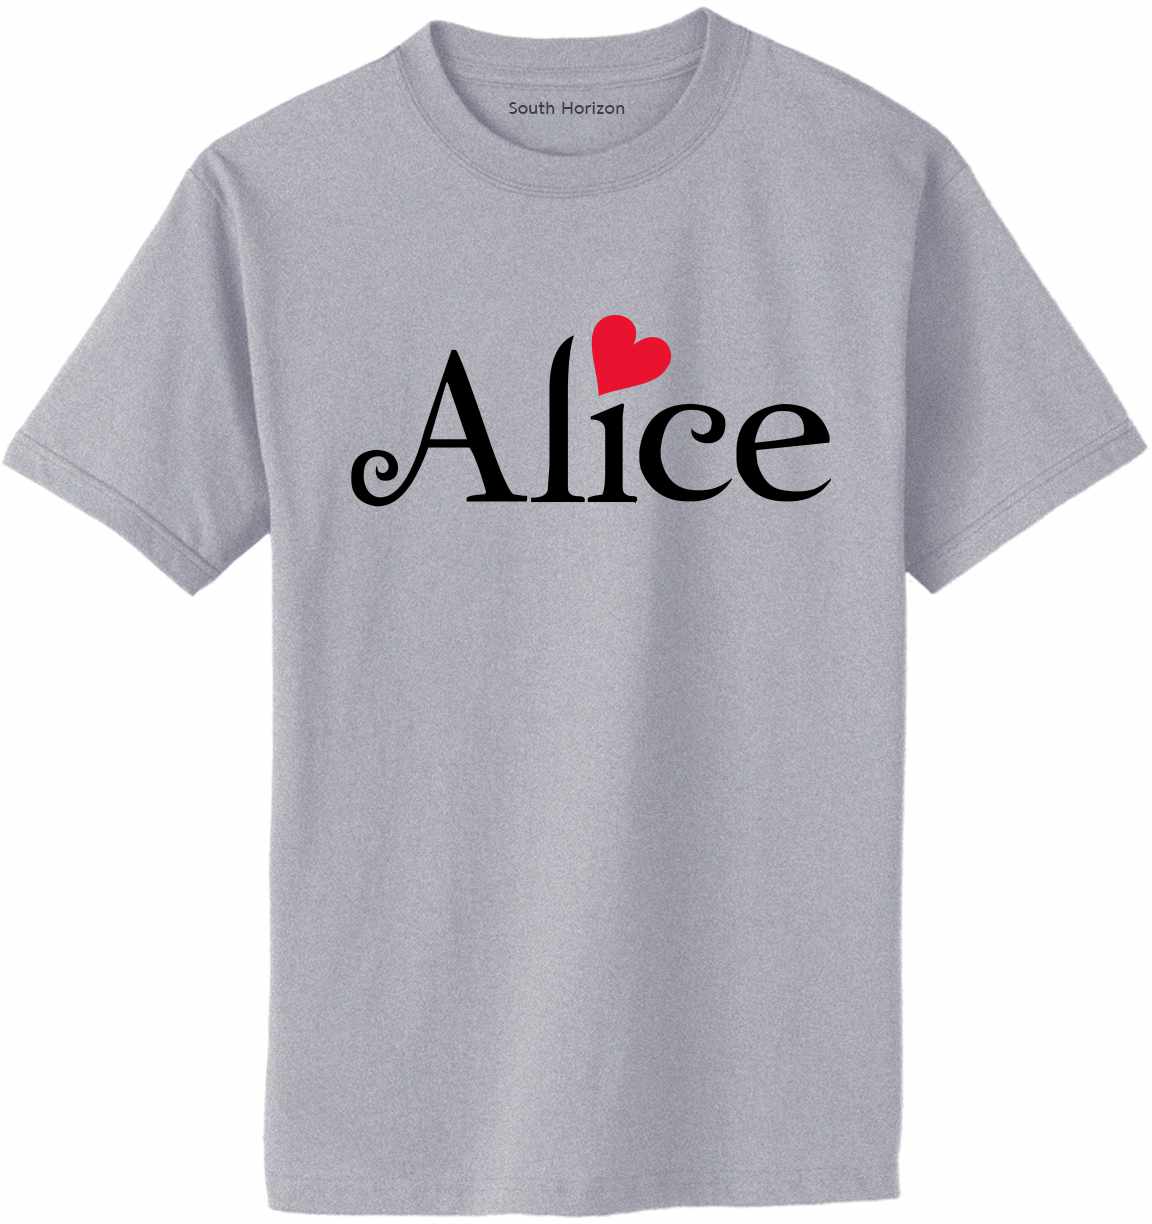 Alice Adult T-Shirt (#531-1)